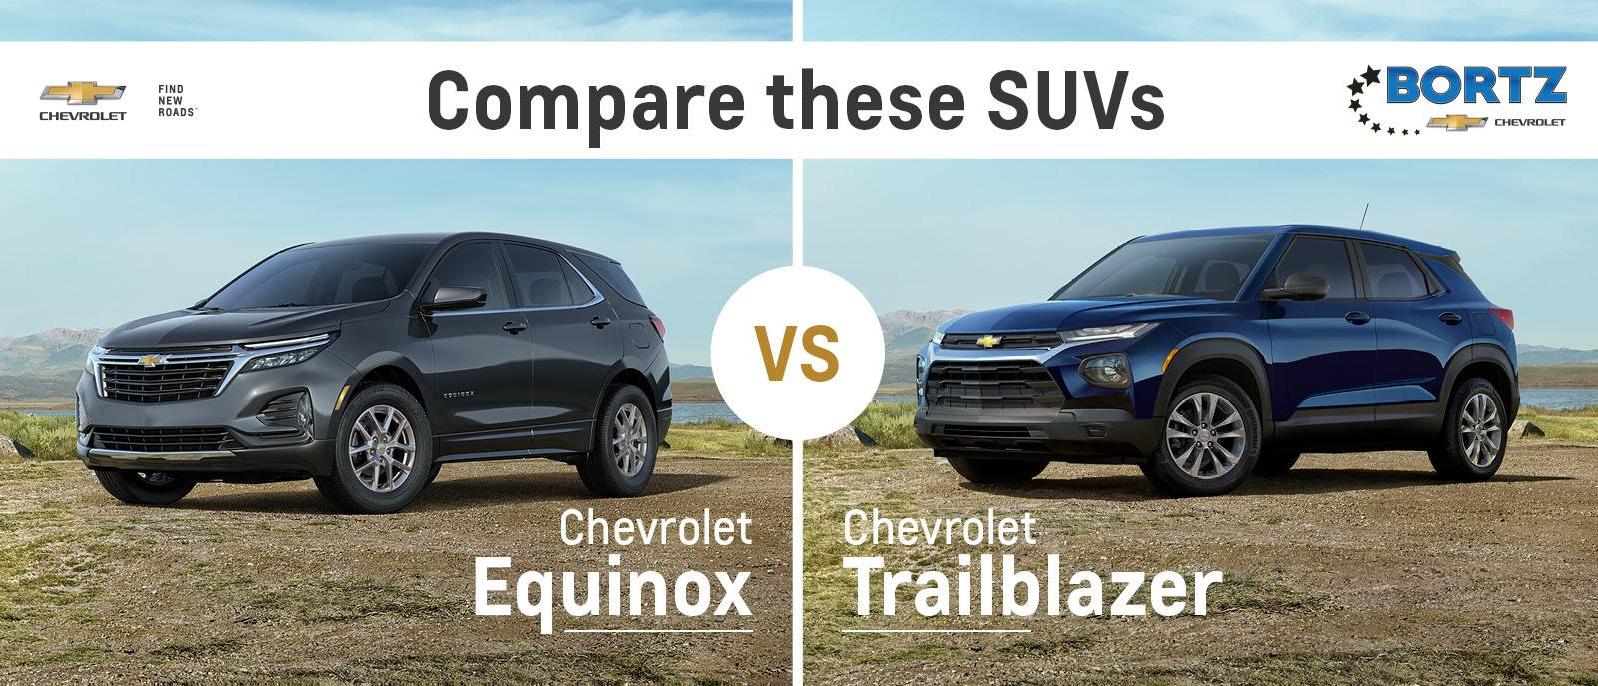 Comparing the 23 Trailblazer & Equinox Bortz Chevrolet